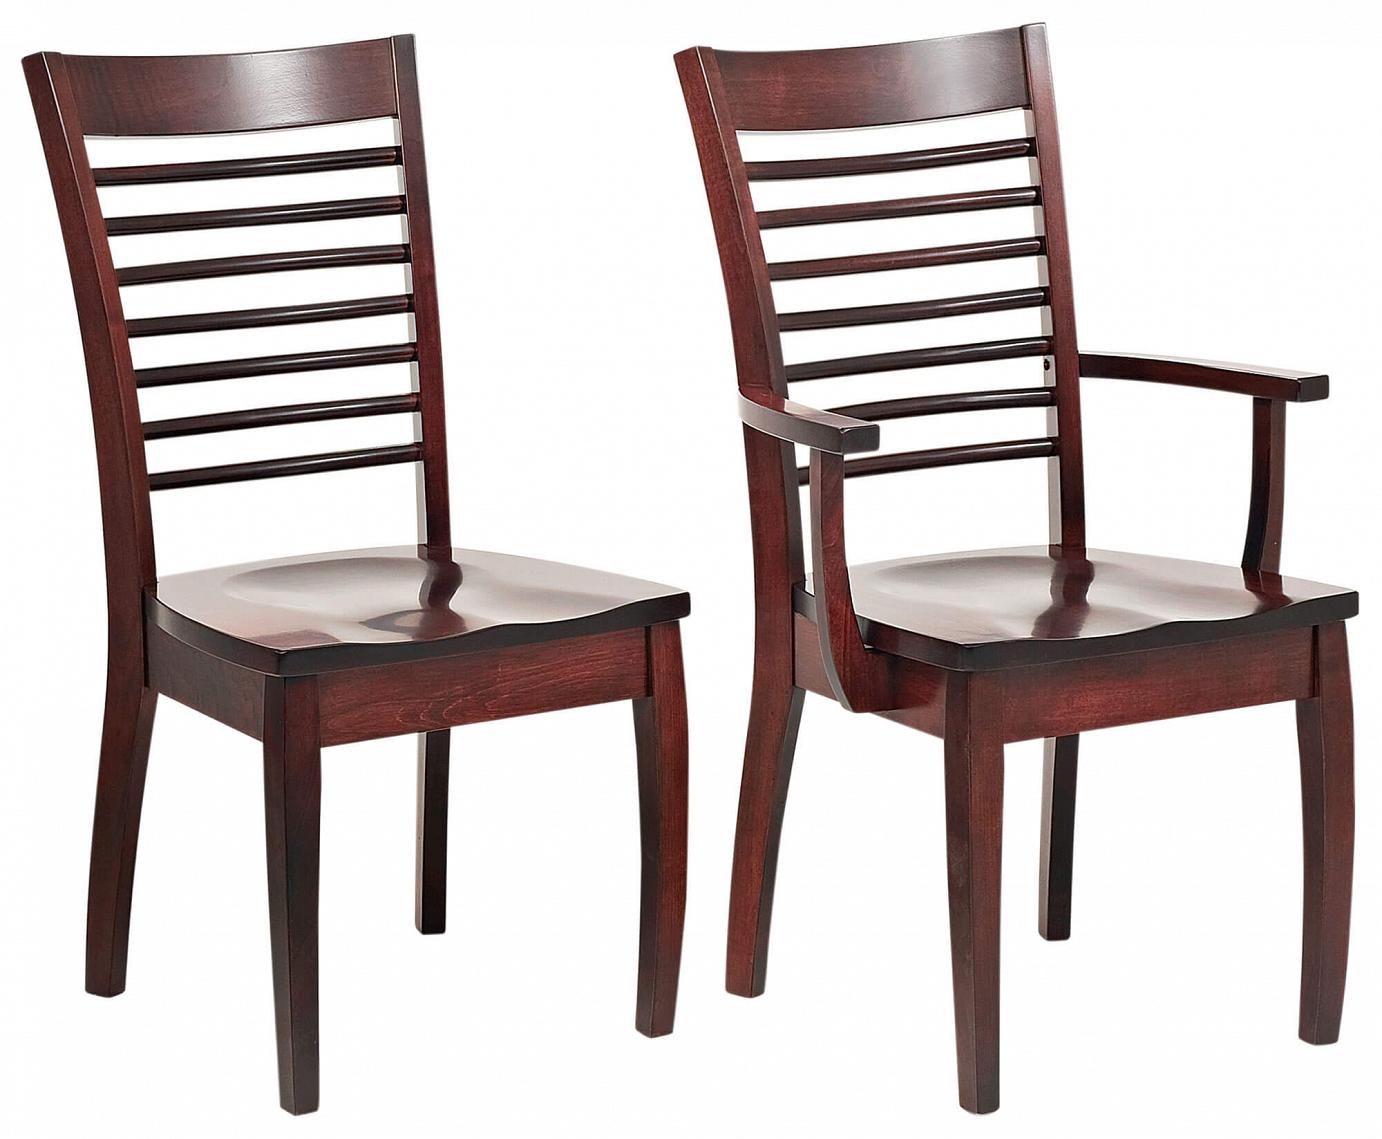 RH Yoder Escalon Chairs